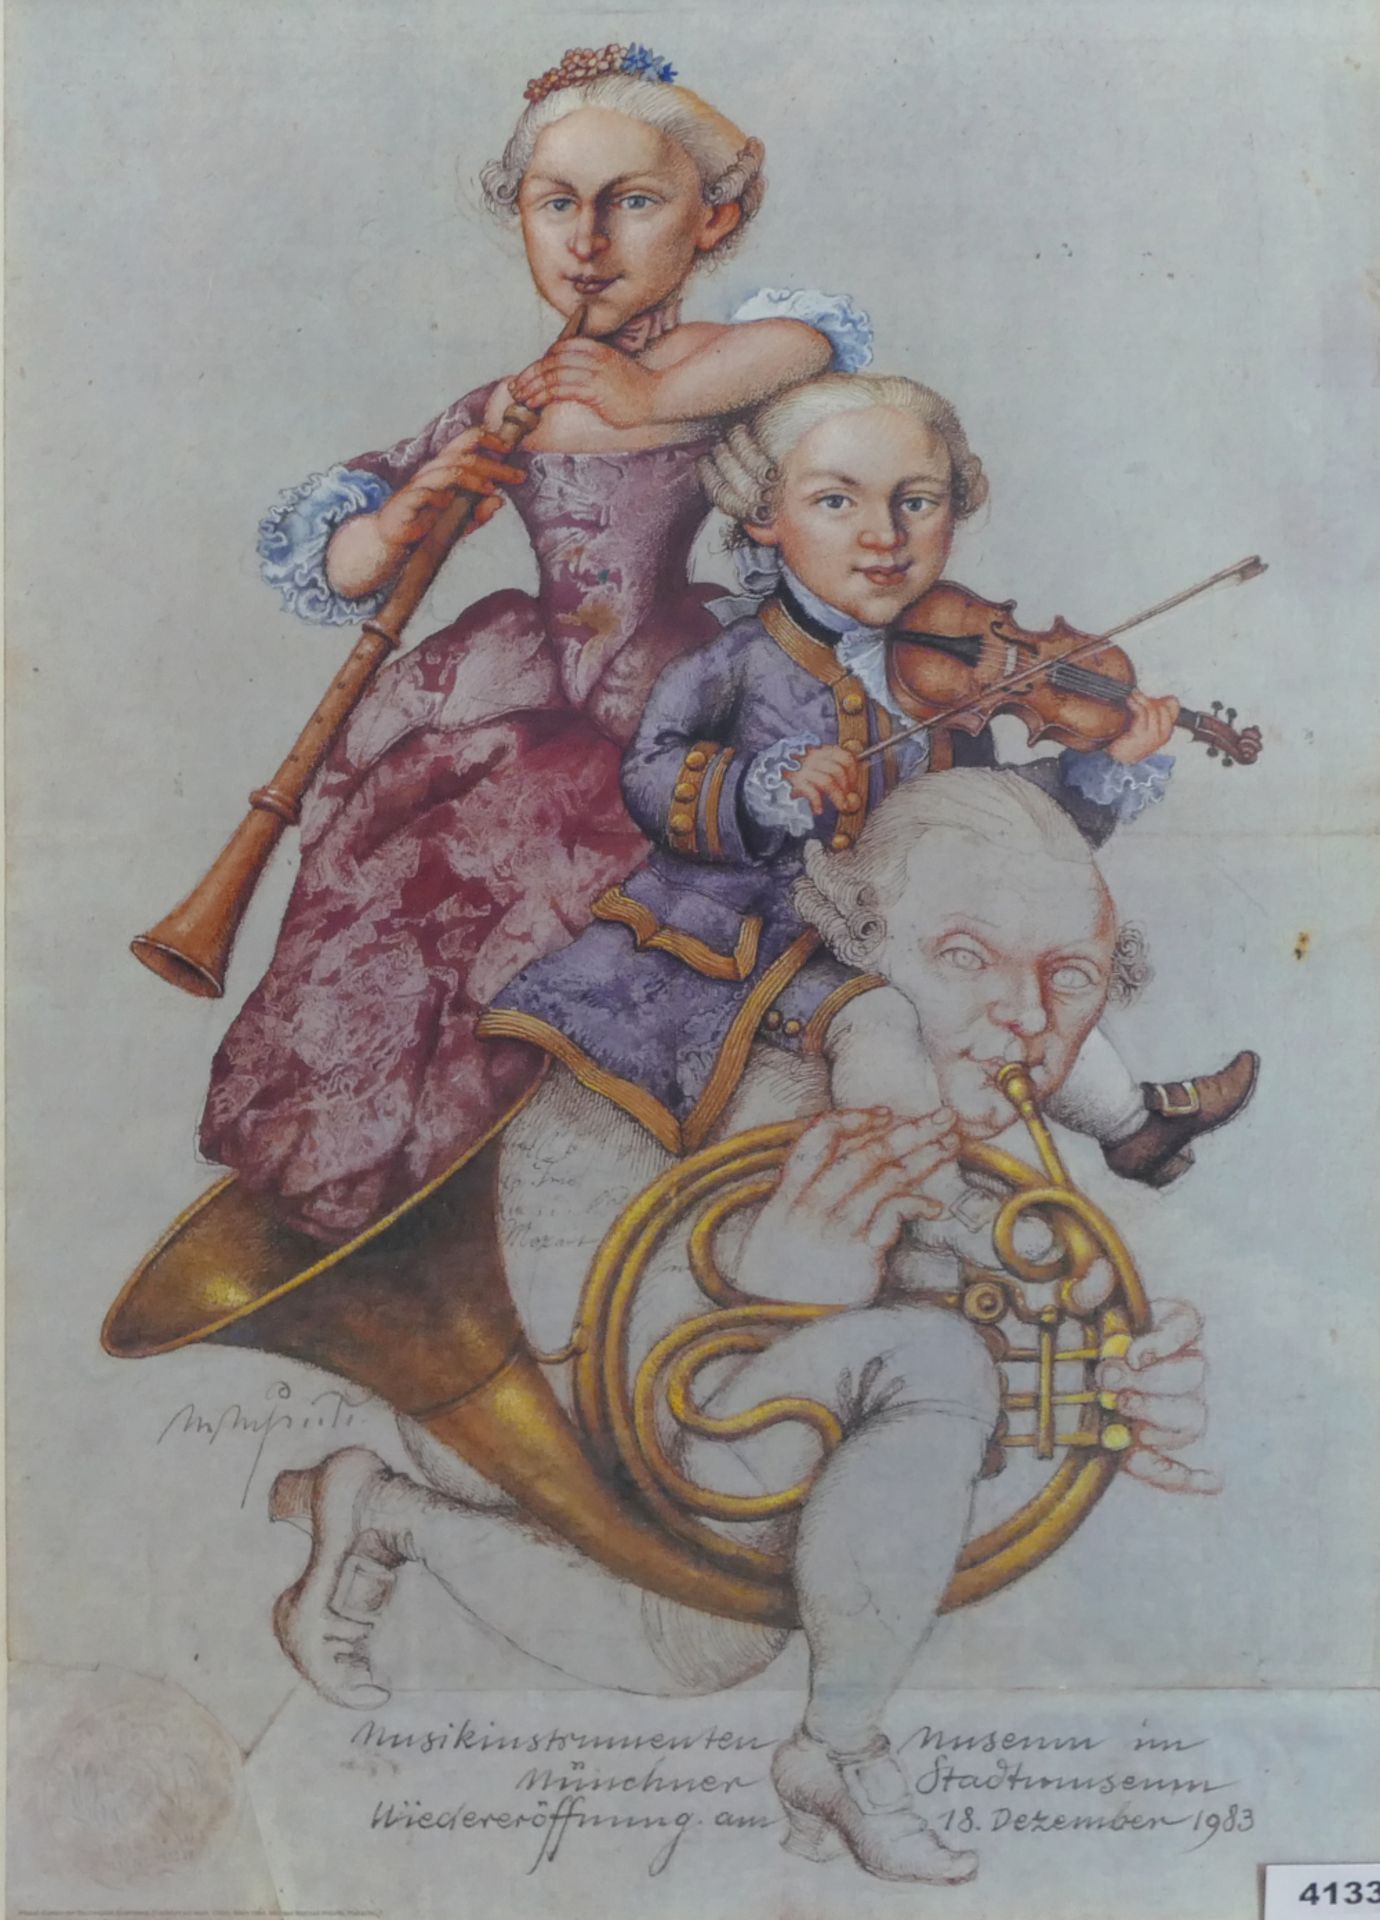 1 Poster nach Michael Mathias PRECHTL (1926 Amberg-2003 Nürnberg) "Musikinstrumentenmuseum im Münchn